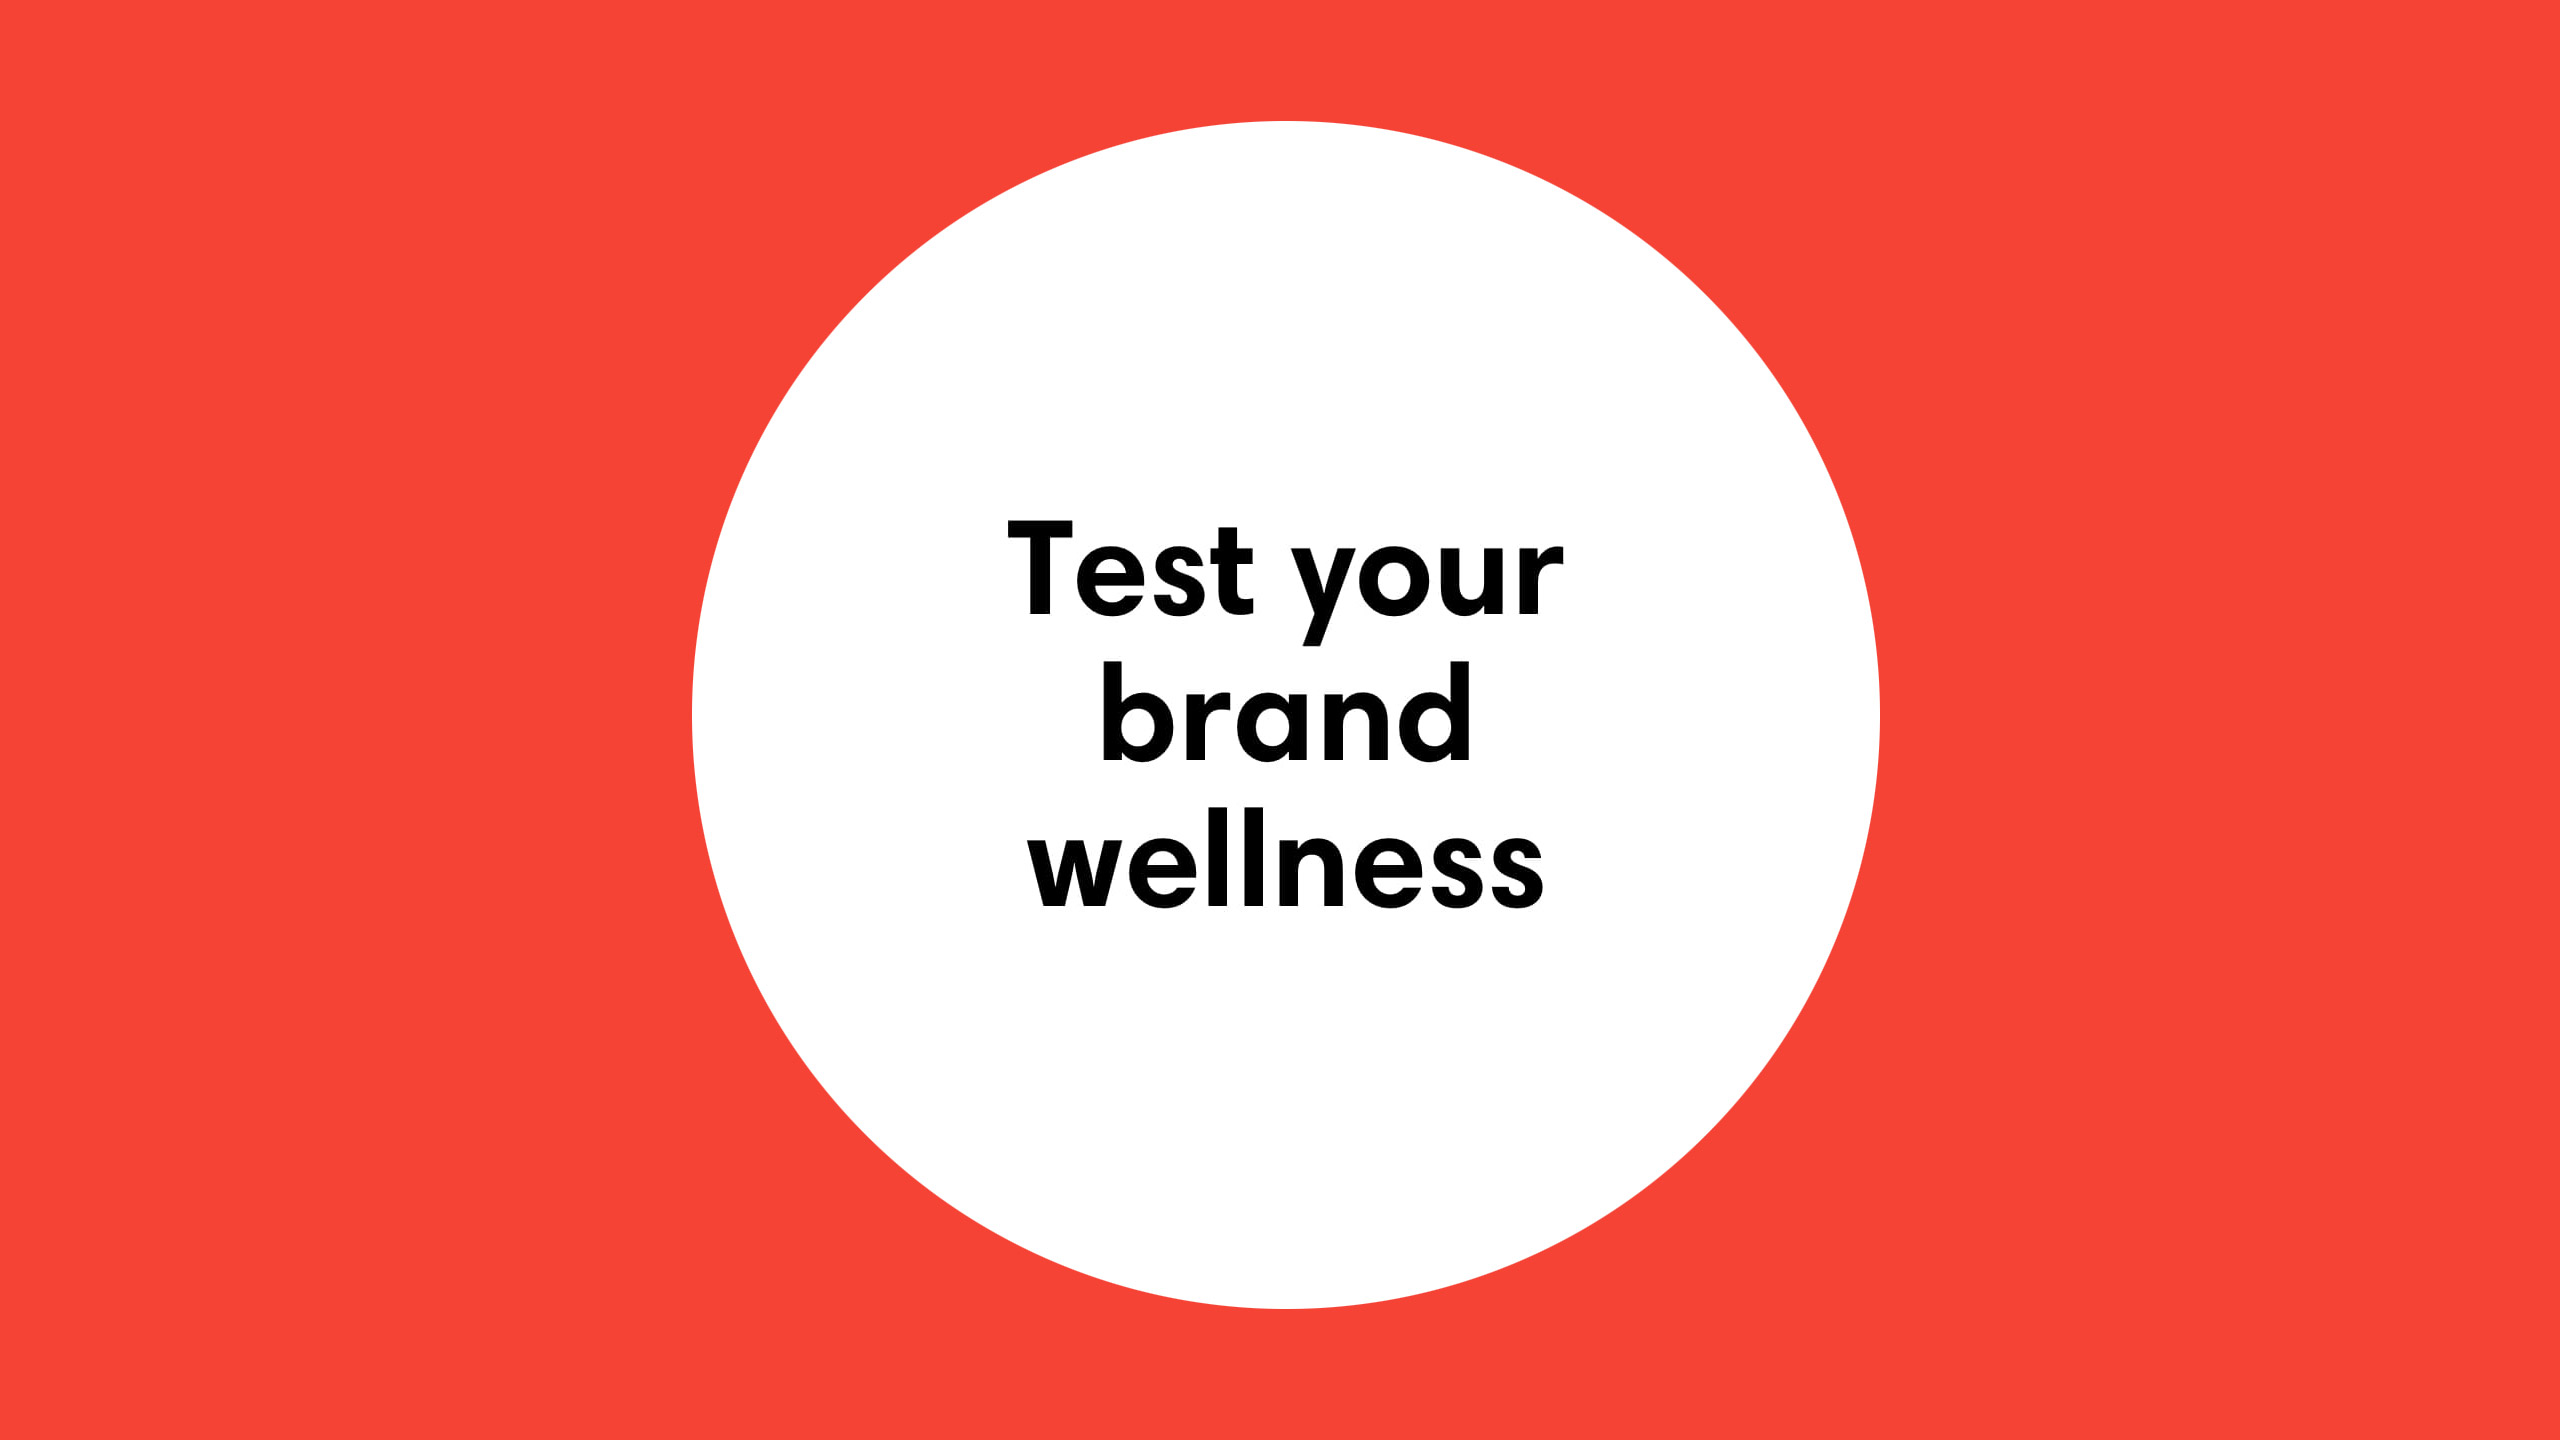 Test your brand wellness